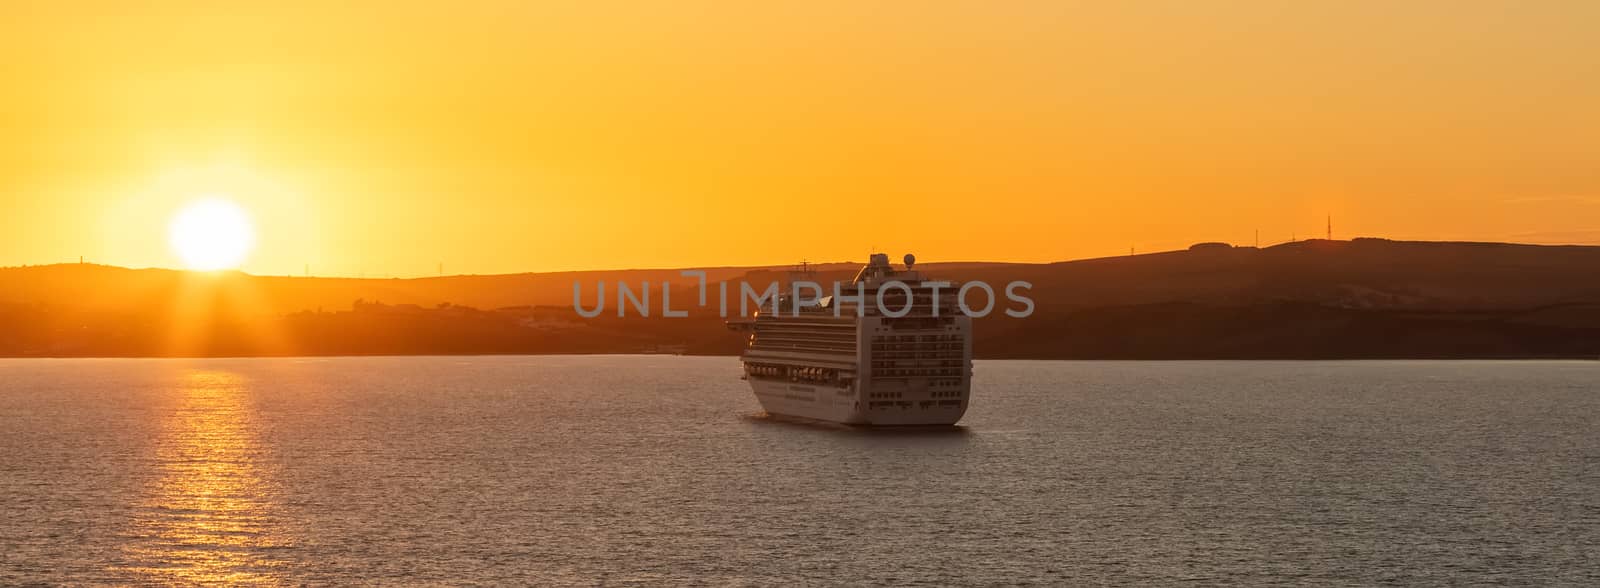 Weymouth Bay, United Kingdom - July 6, 2020: Beautiful panoramic shot of P&O cruise ship Ventura anchored in Weymouth Bay at sunset